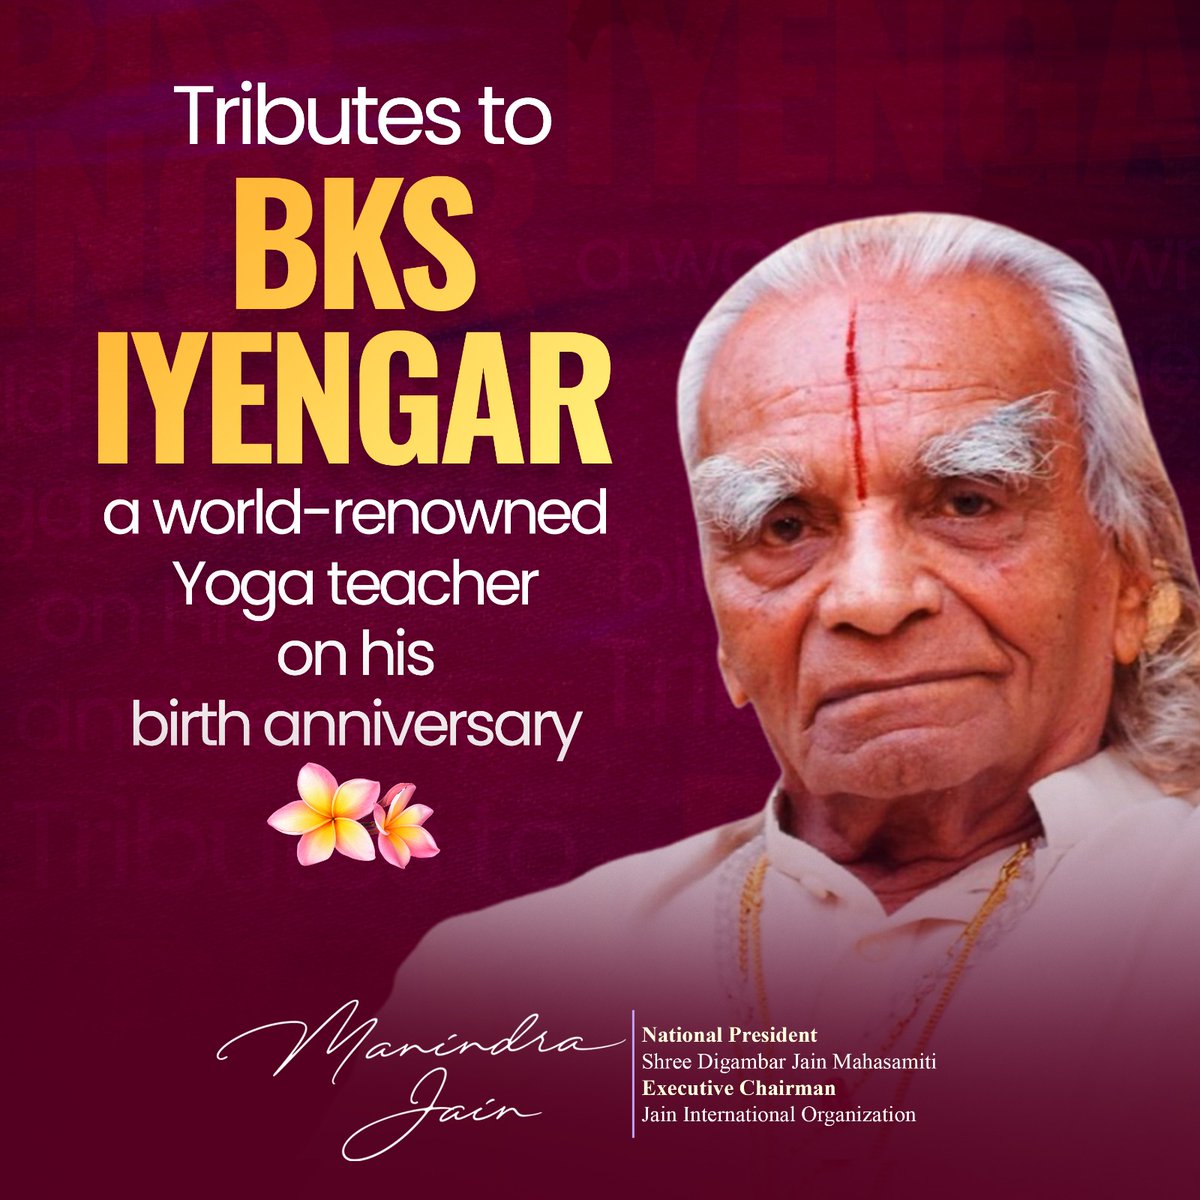 Tributes to BKS IYENGAR a world-renowned Yoga teacher on his birth anniversary.
#BKSiyengar